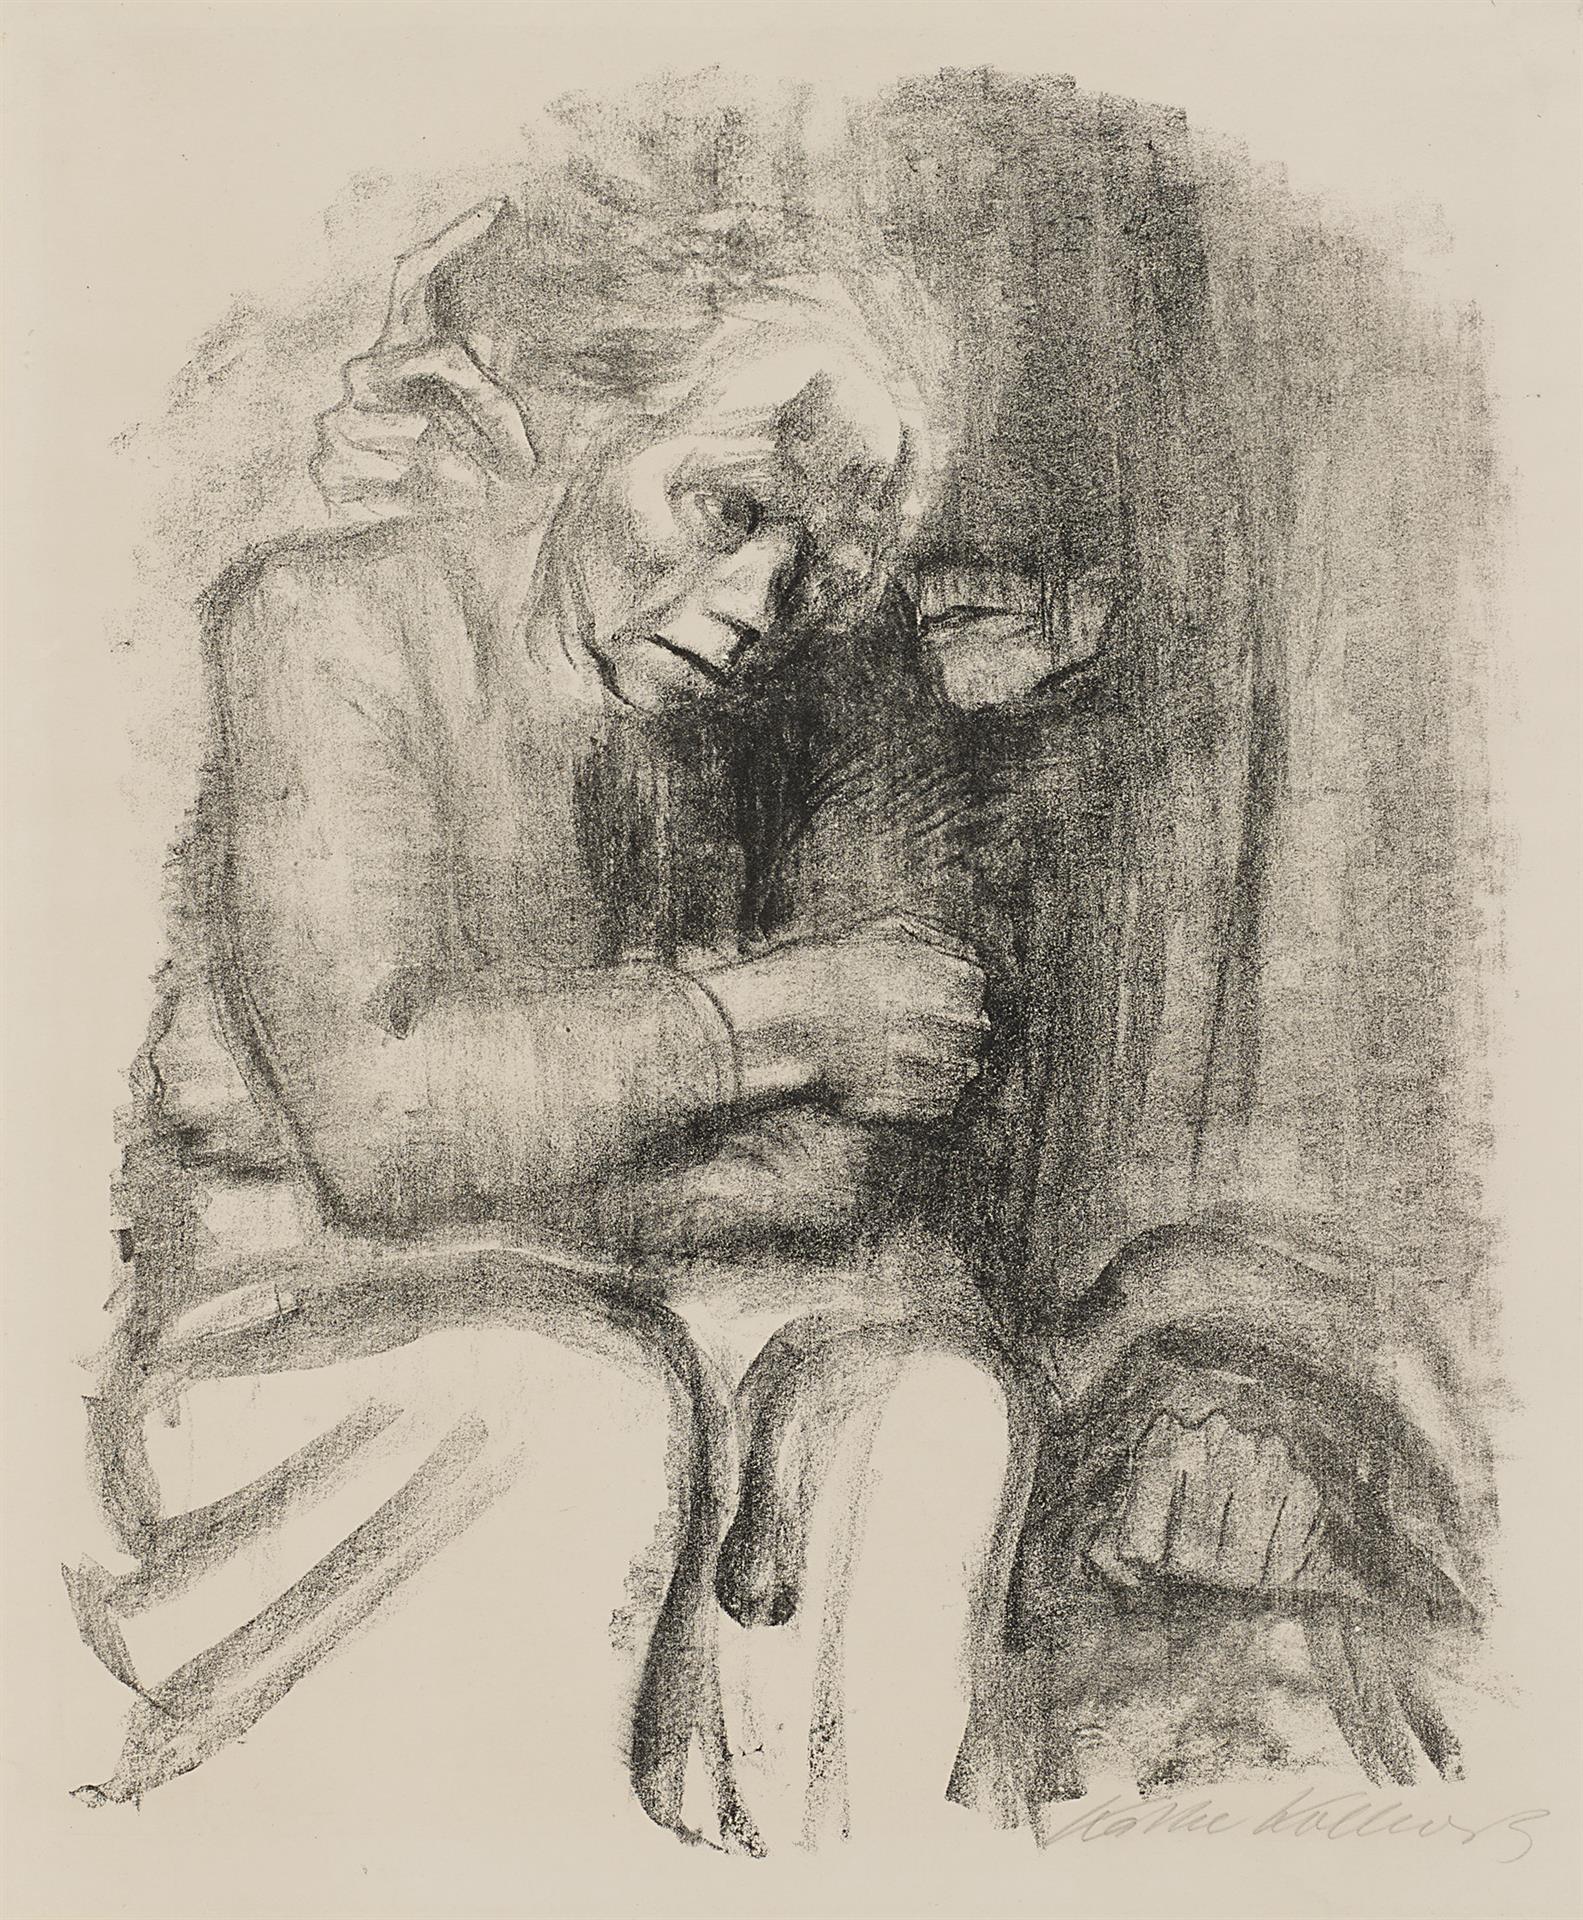 Käthe Kollwitz, Adieu et mort, 1923, lithographie au crayon (report), Kn 200 II b, Collection Kollwitz de Cologne © Käthe Kollwitz Museum Köln